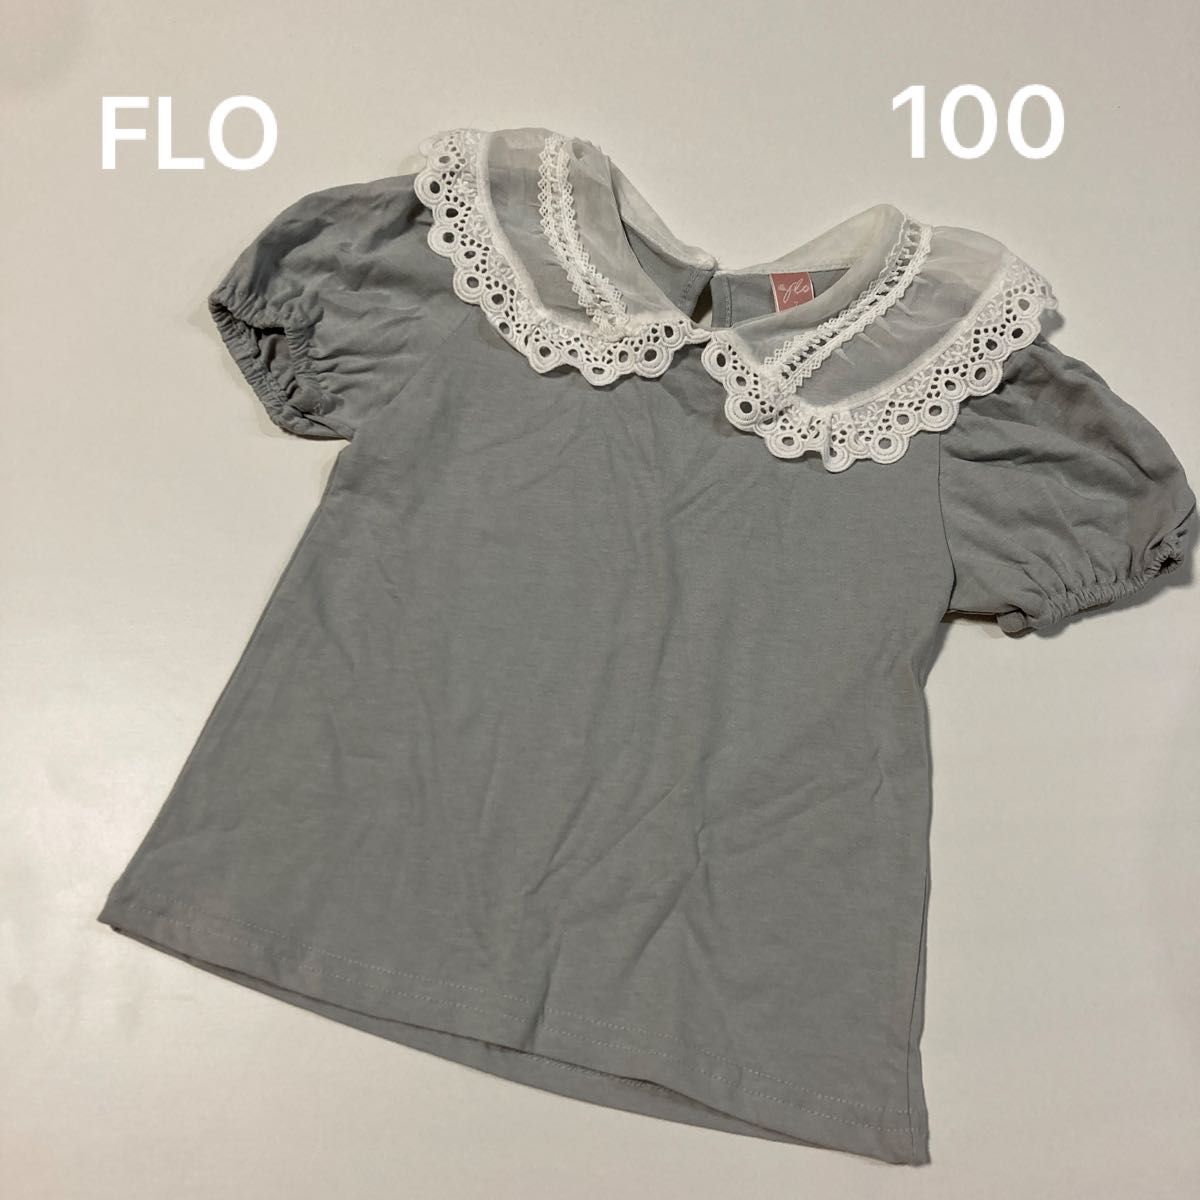 186 FLO シャツ 襟付き レース 半袖 子供服 7号 100サイズ